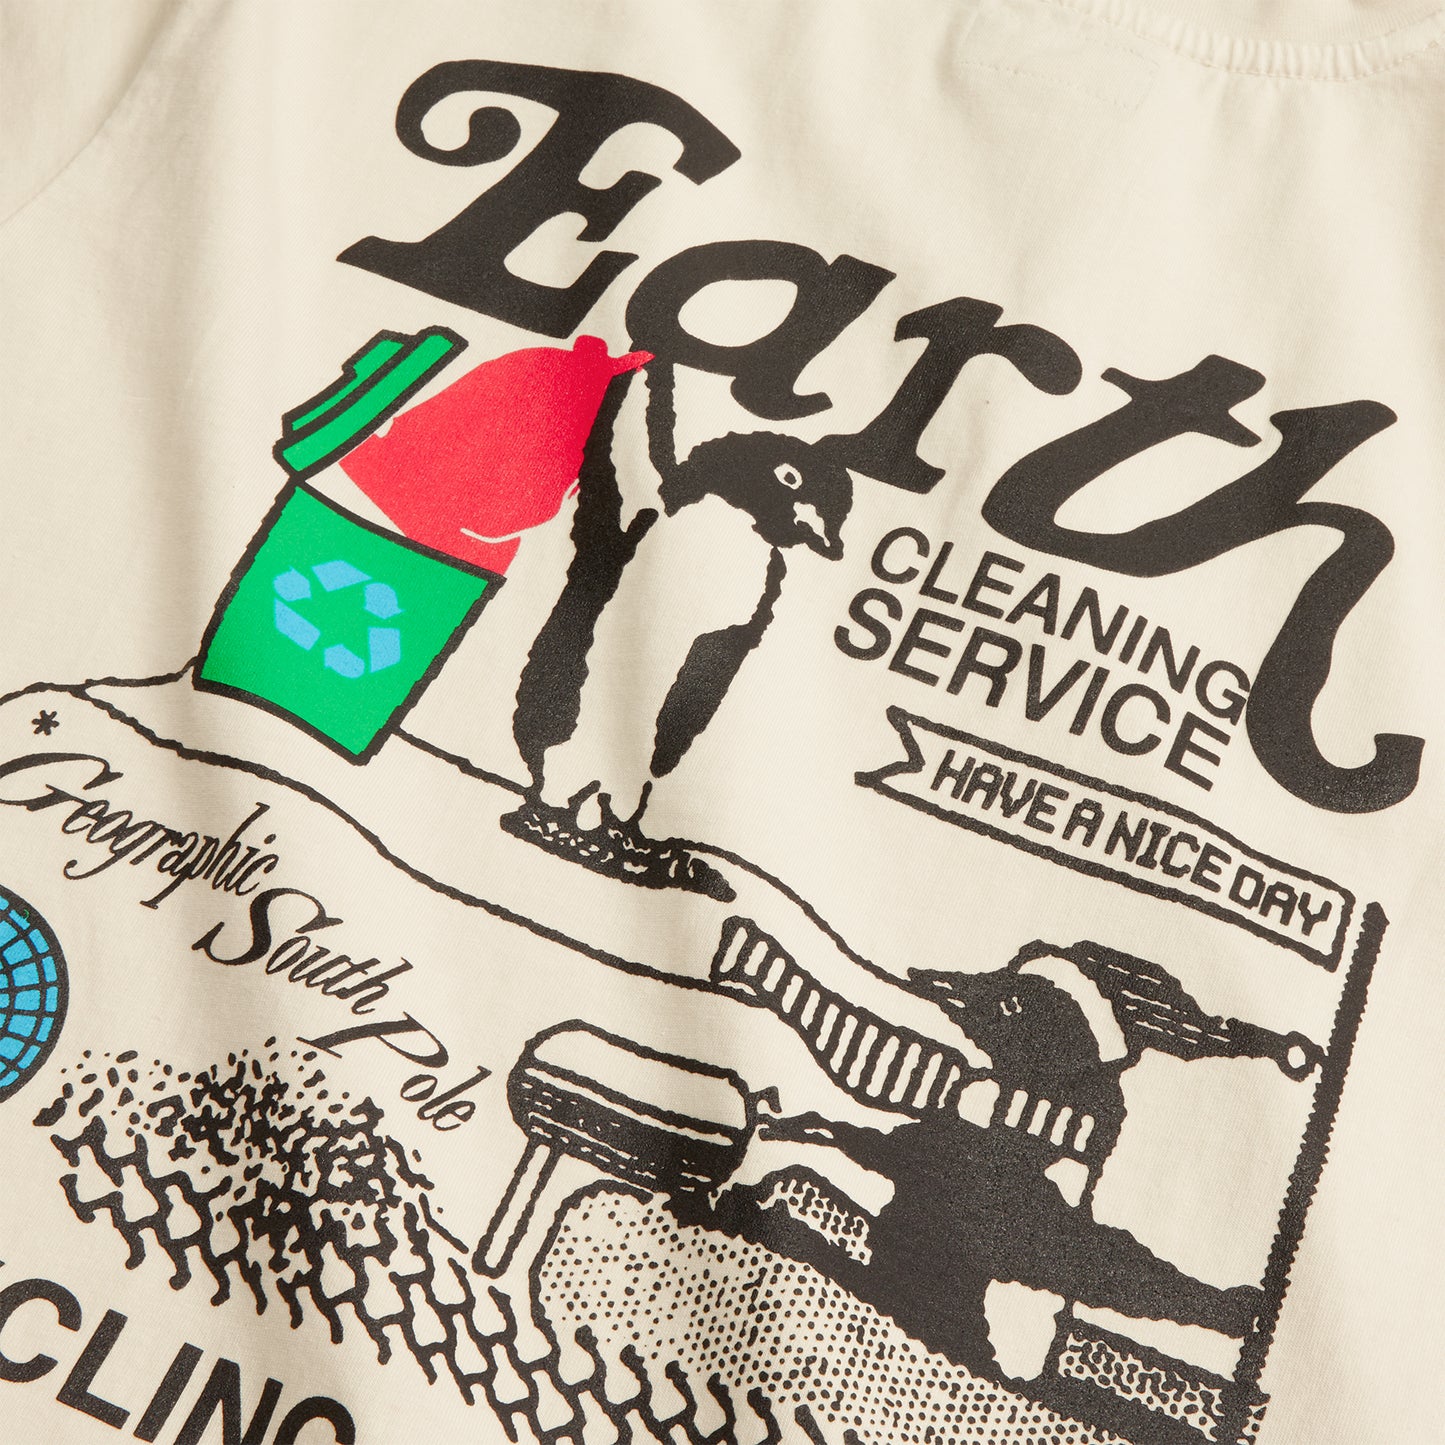 Market Cleaning Service T-Shirt Q4 (Ecru)